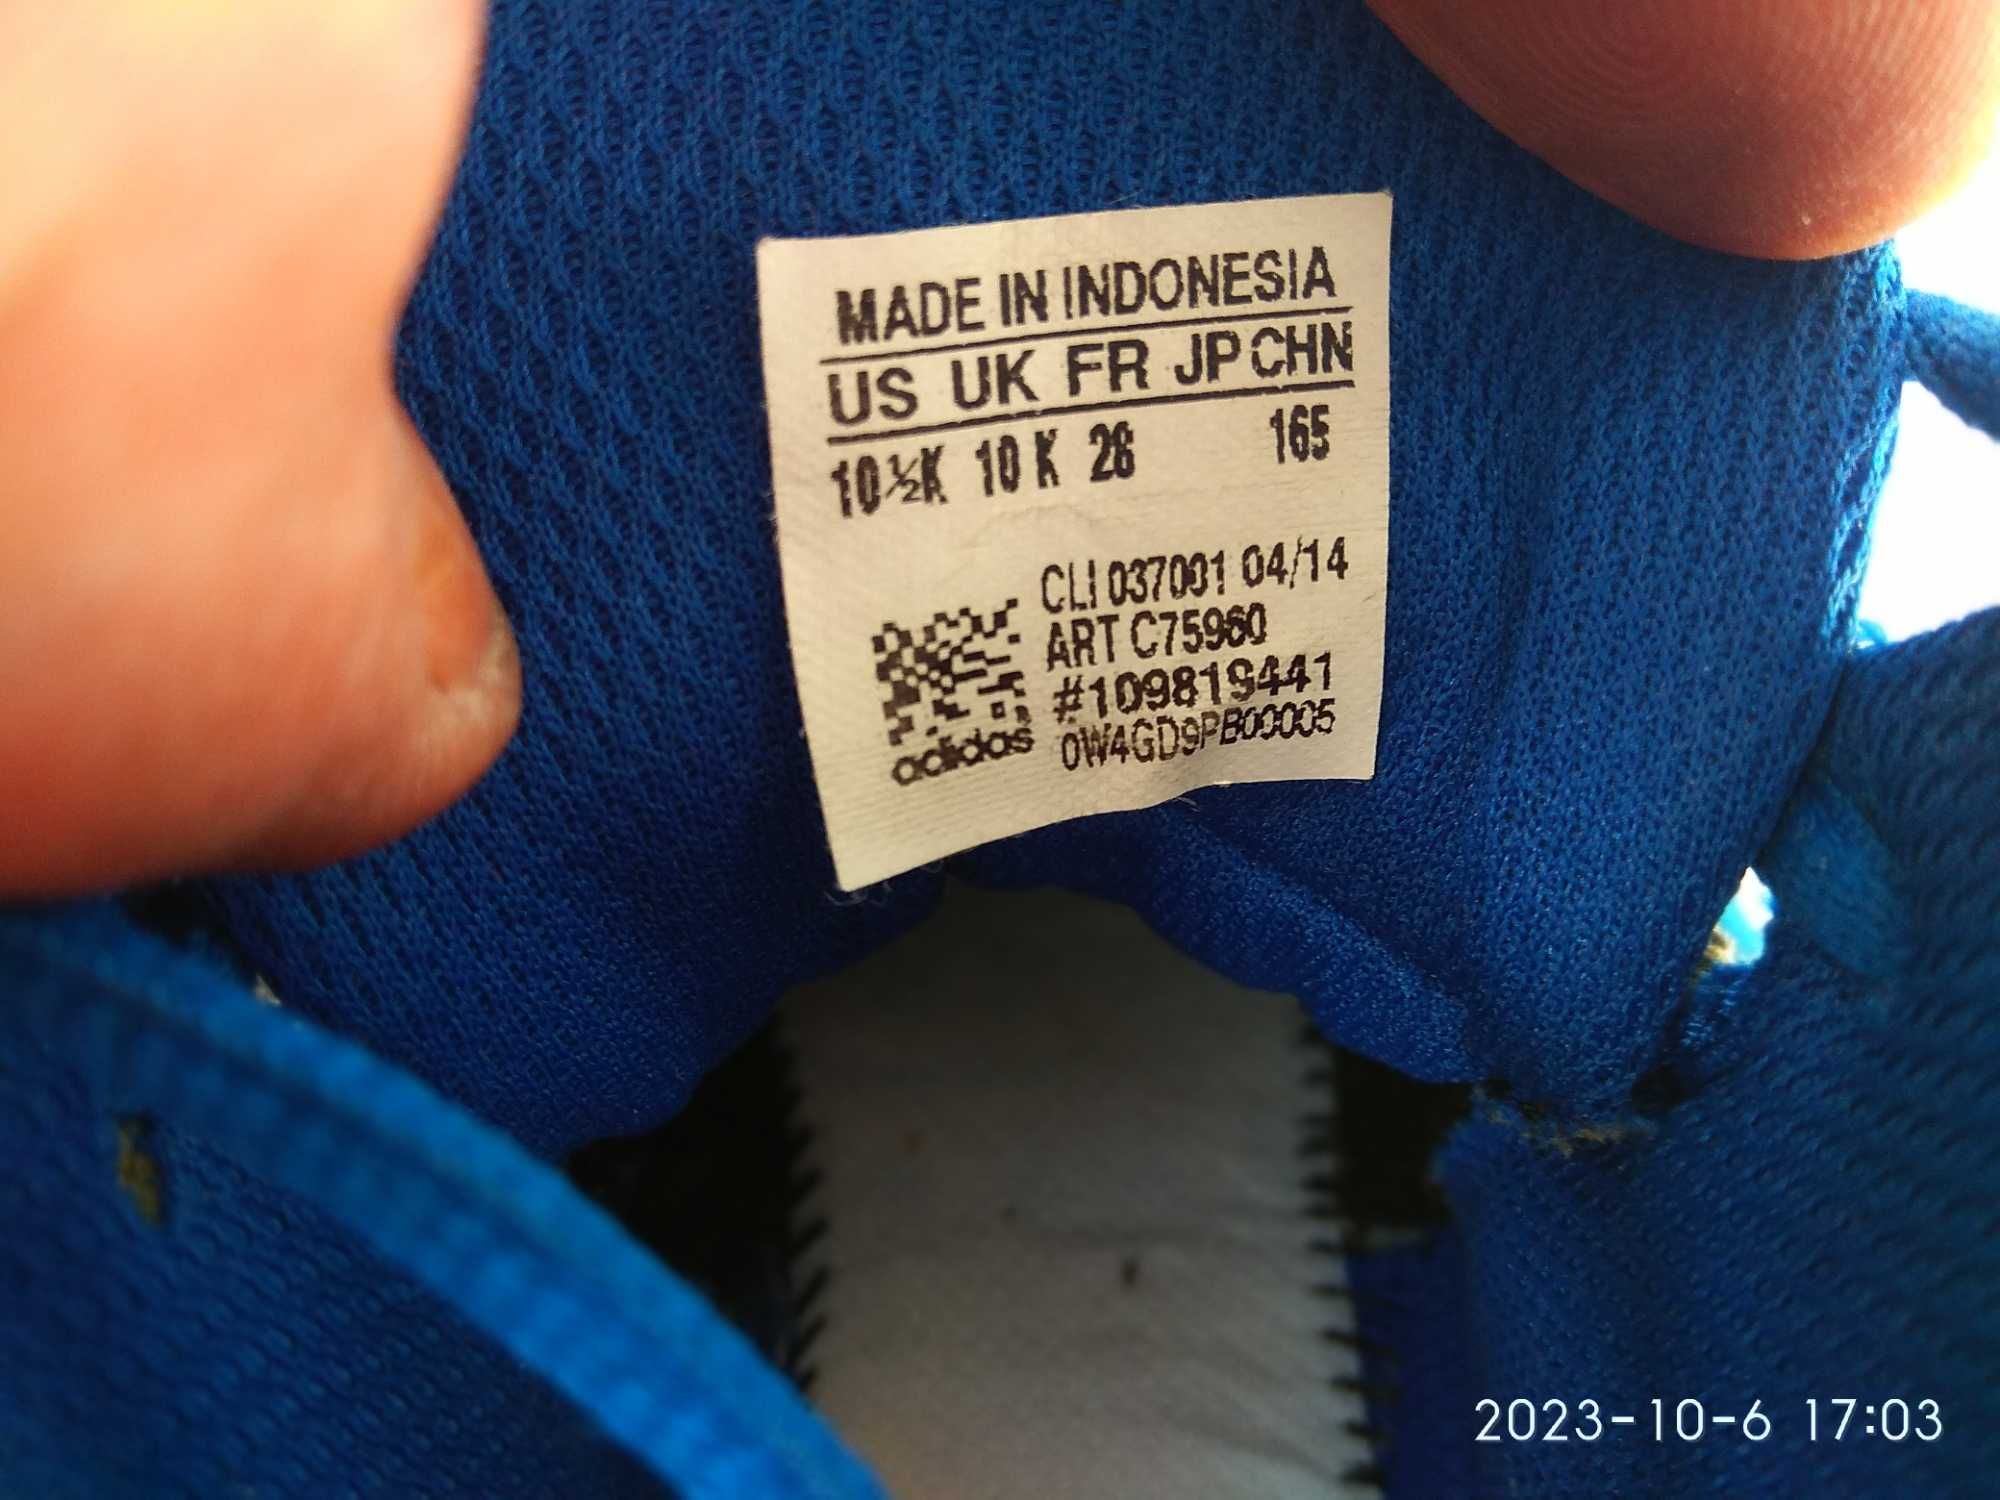 Ботинки,кроссовки Adidas NBA р.28